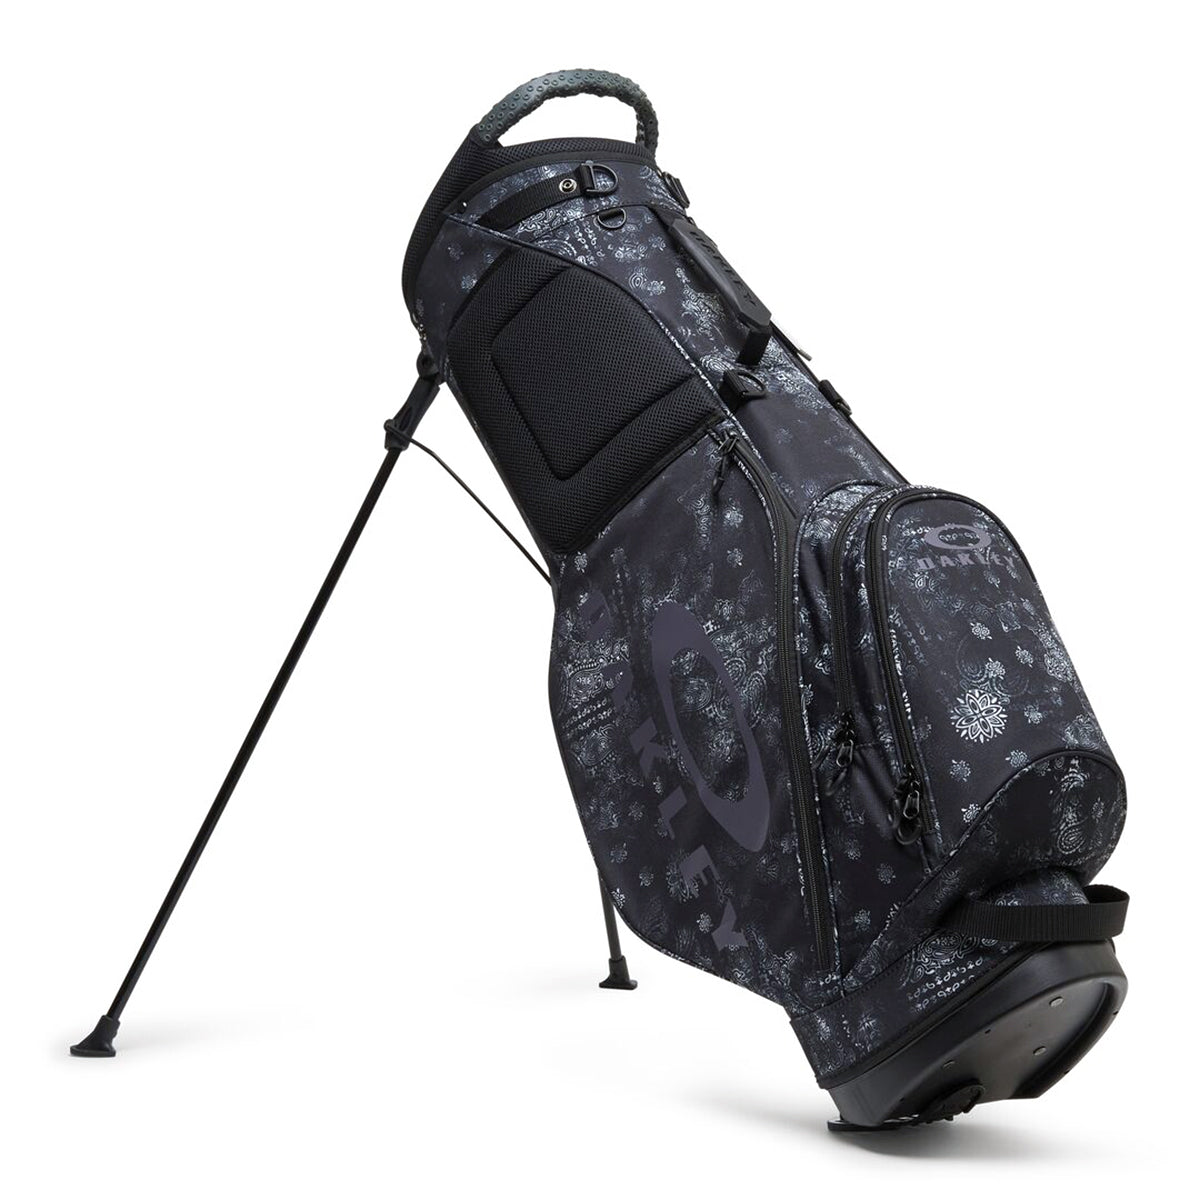 Oakley Golf 17.0 FW Stand Bag